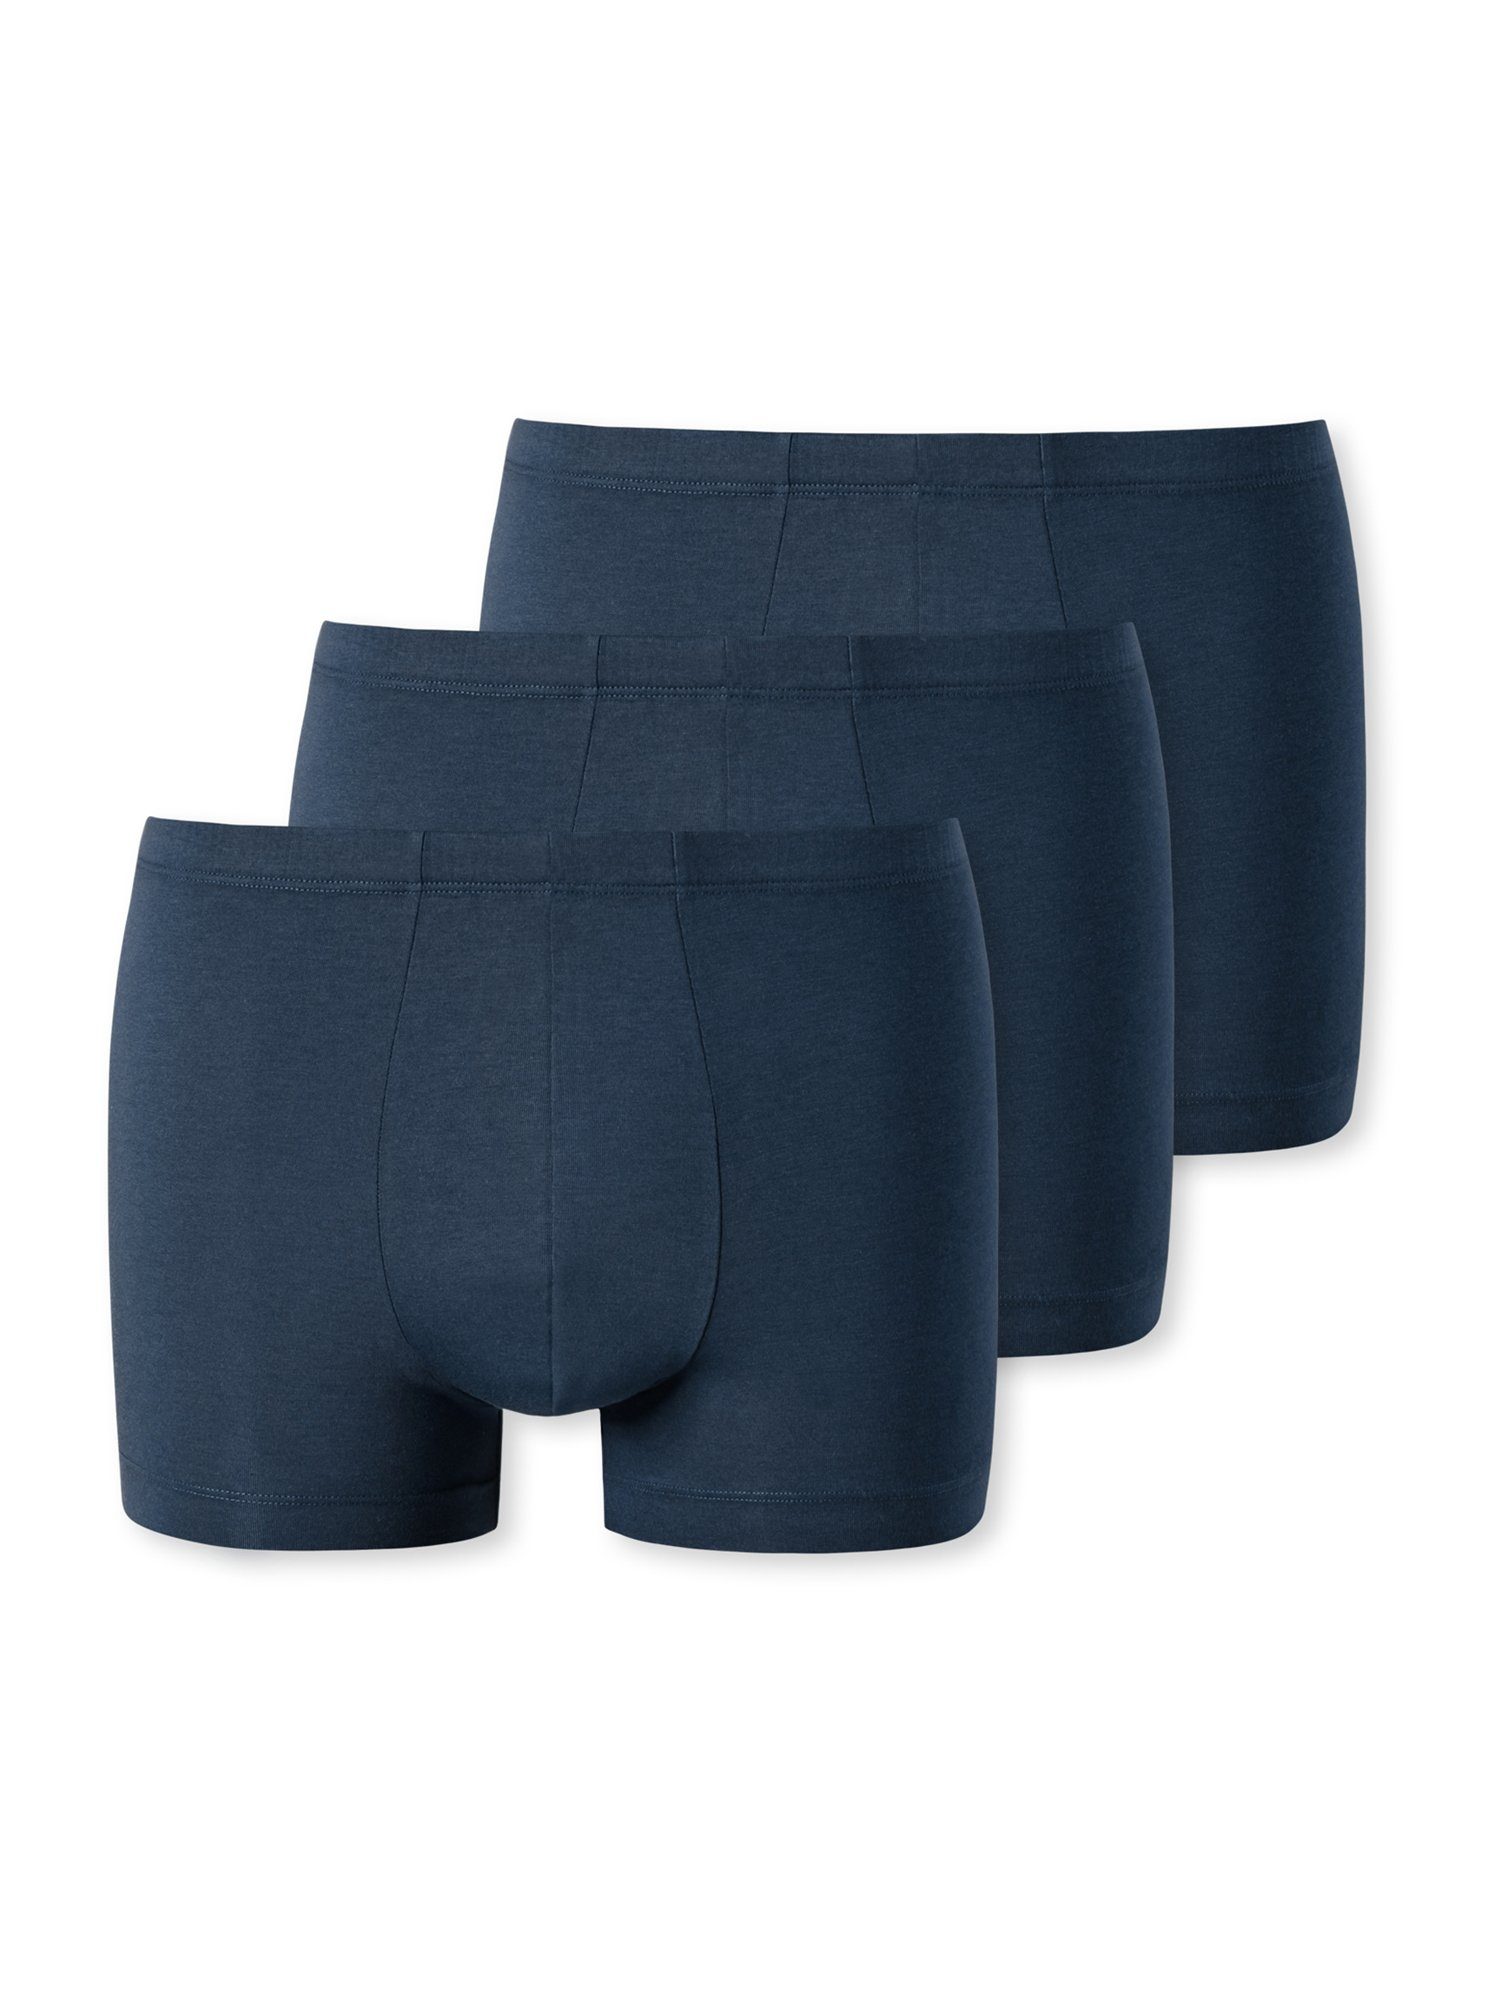 Beförderungsantrag Schiesser Retro Pants 'Modal Fever' dunkelblau (3-St) 3-Pack